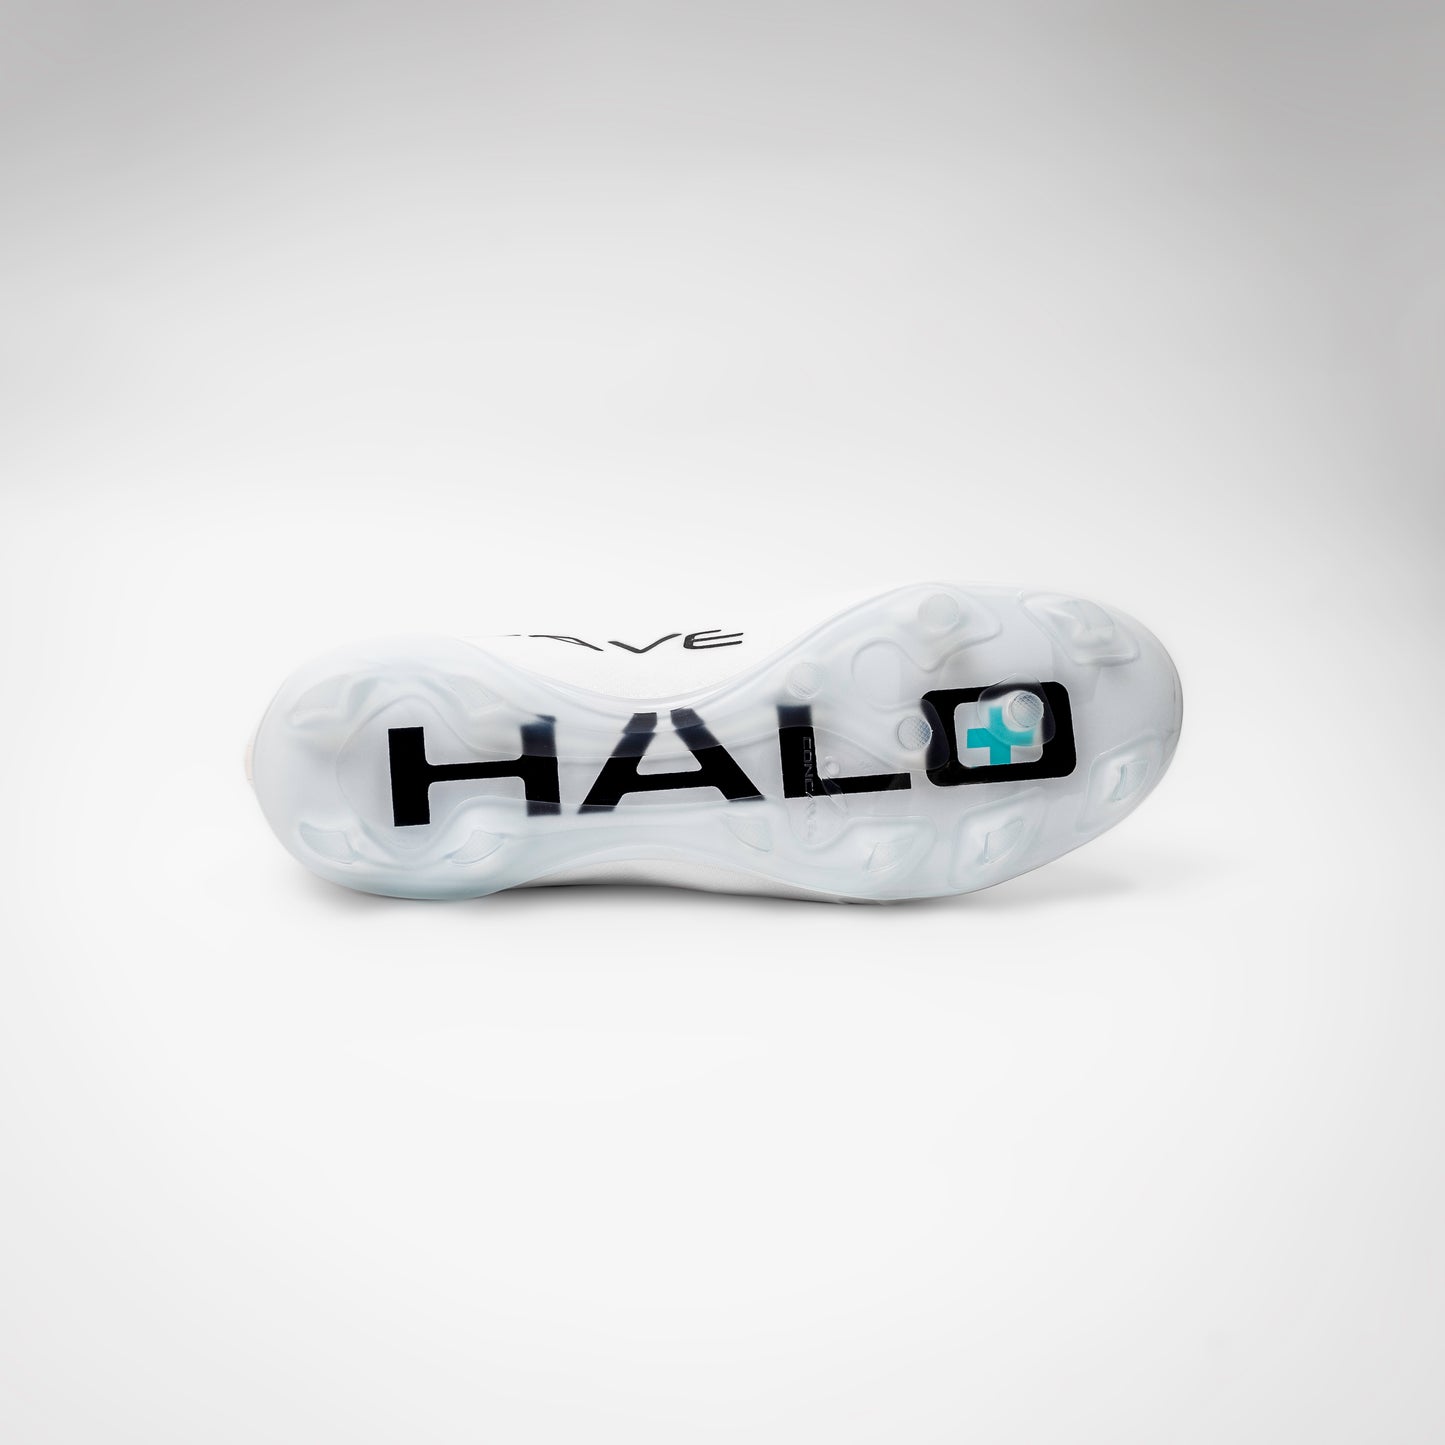 Concave Halo + v2 FG - White/Cyan/Black